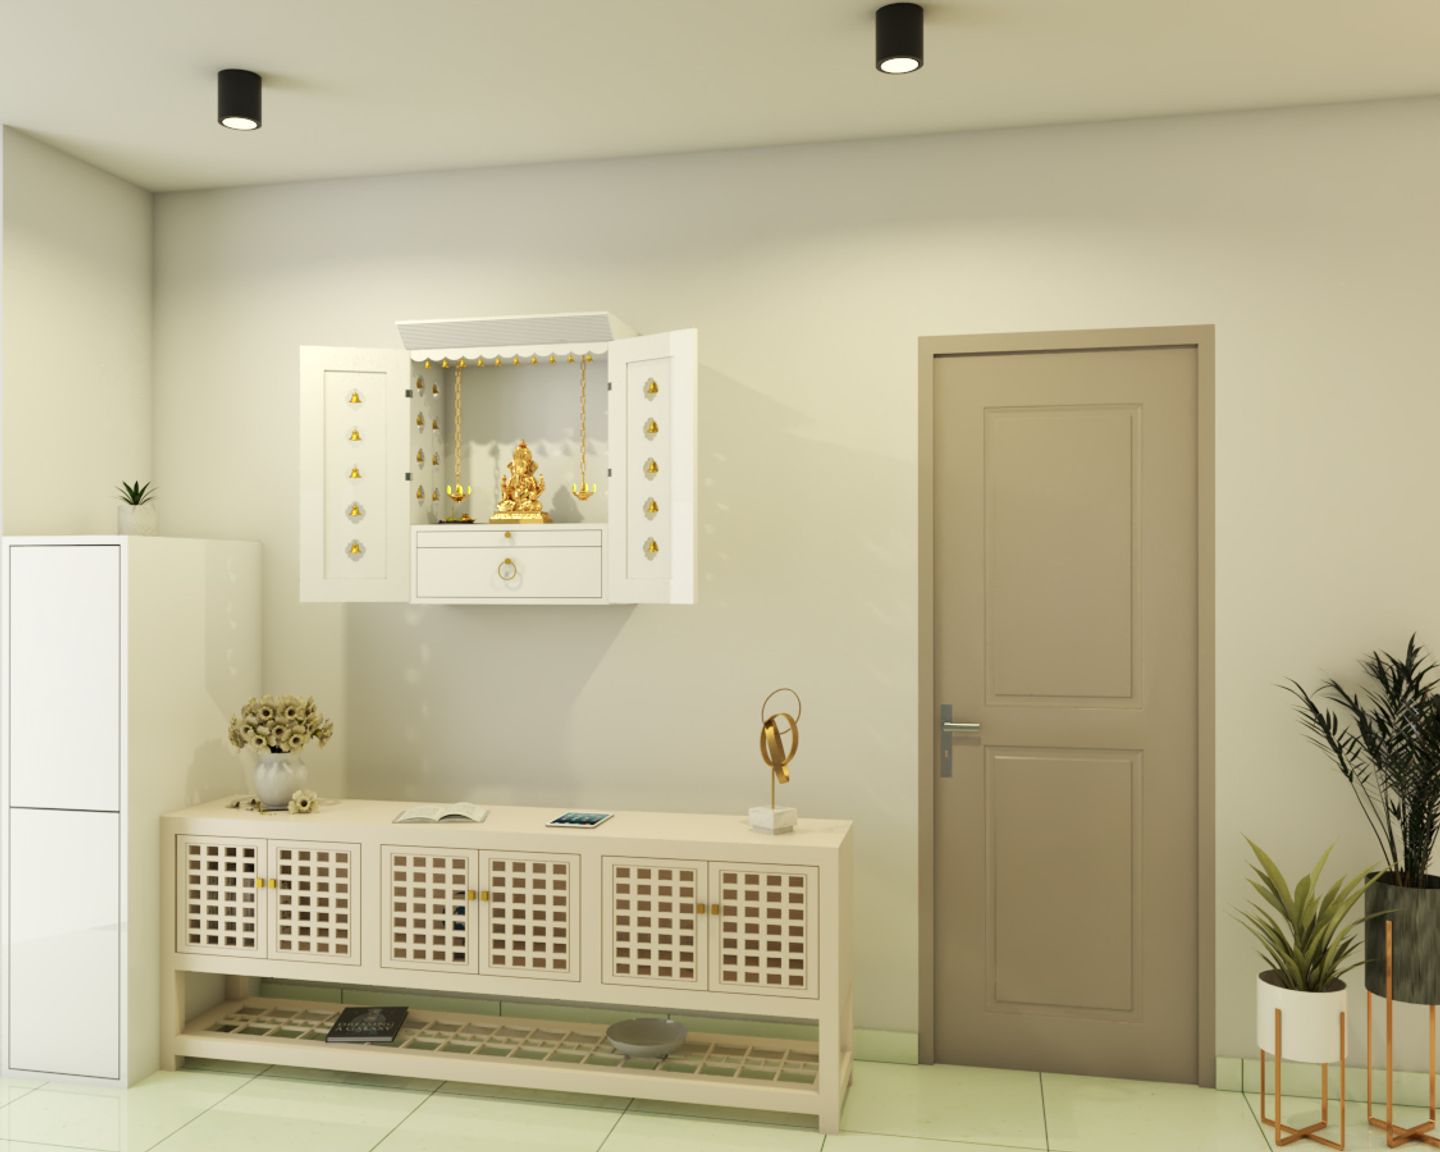 Classic Foyer Design With White Storage Unit - Livspace